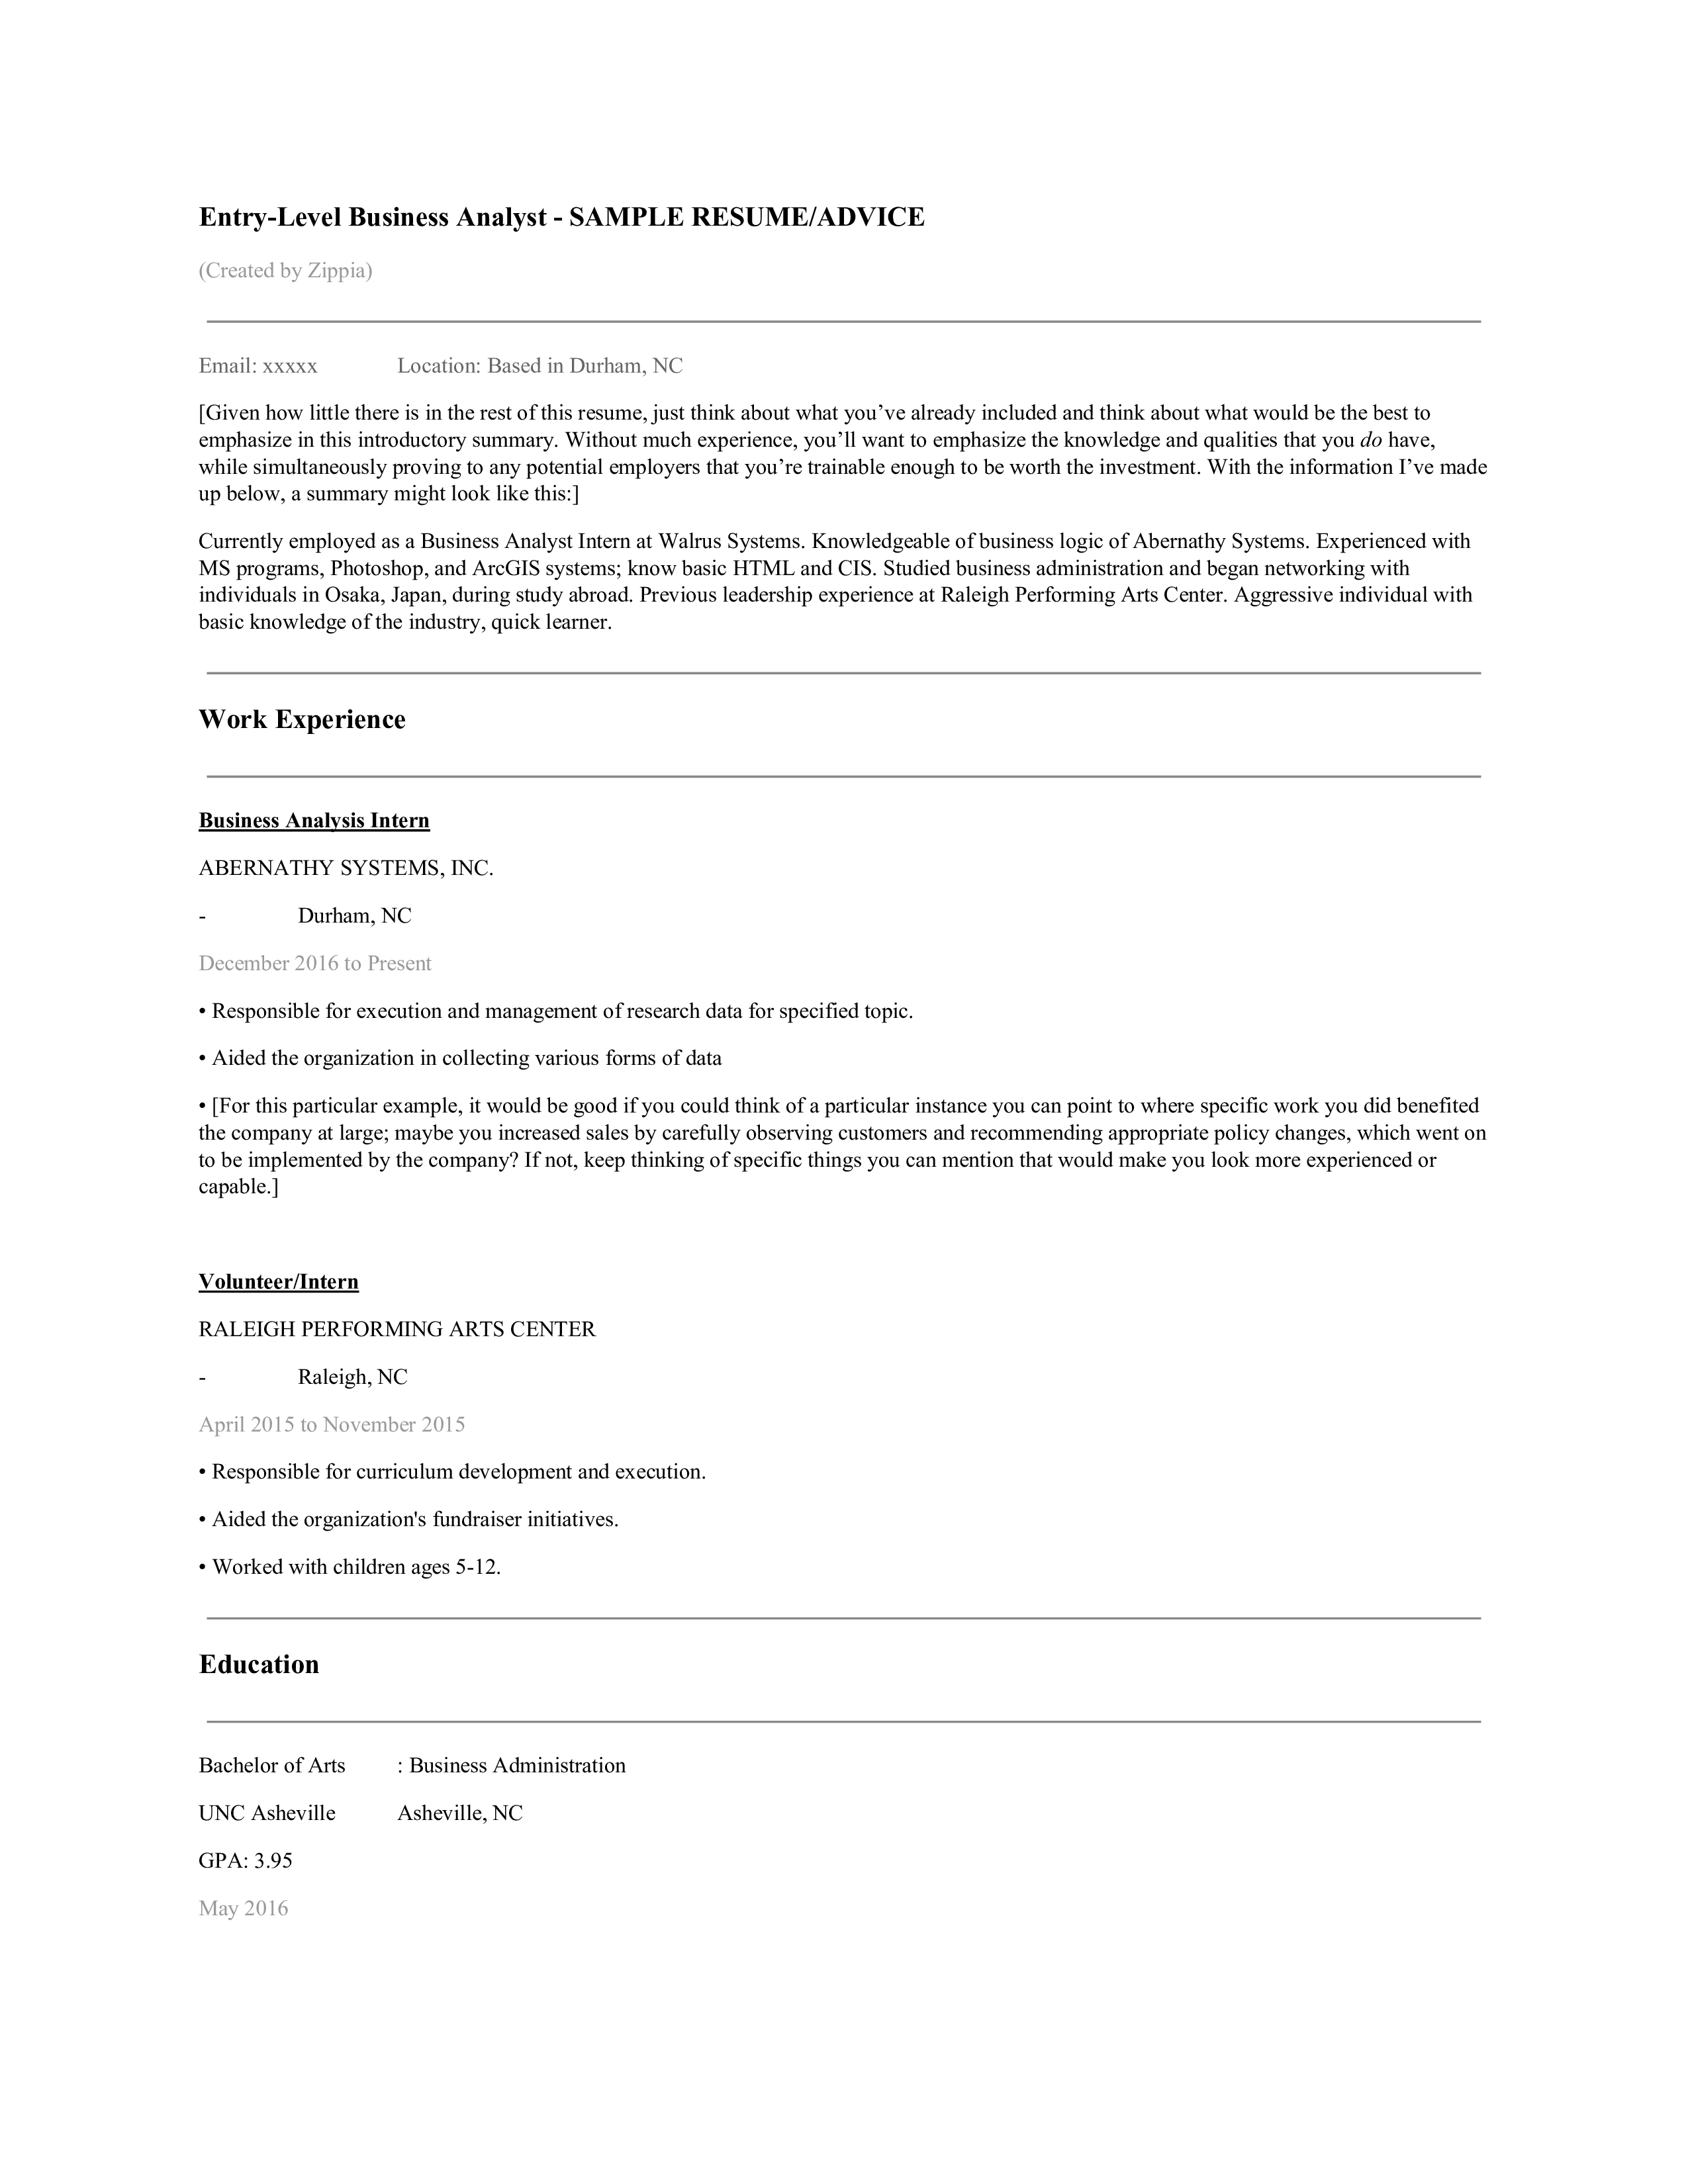 Business Analyst Entry Level Resume sample main image